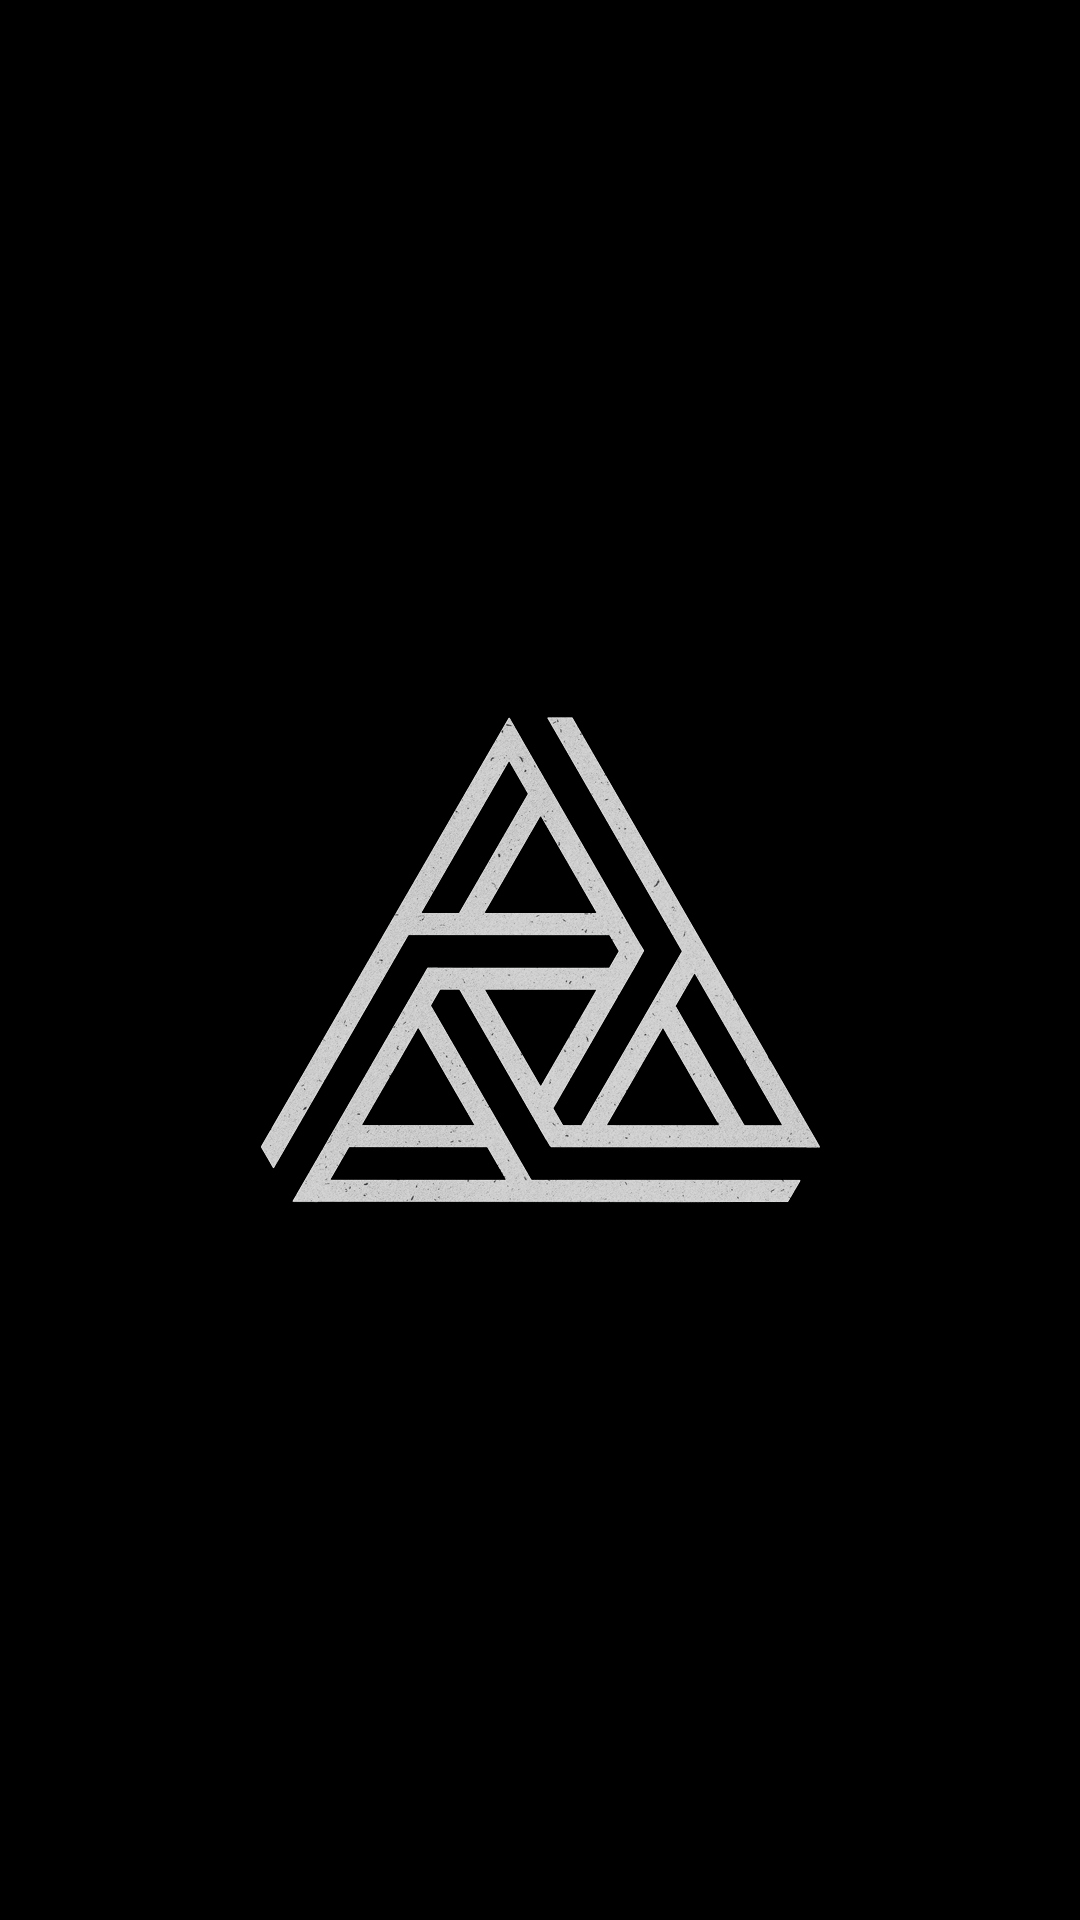 General 1080x1920 black background minimalism digital art abstract Penrose triangle portrait display